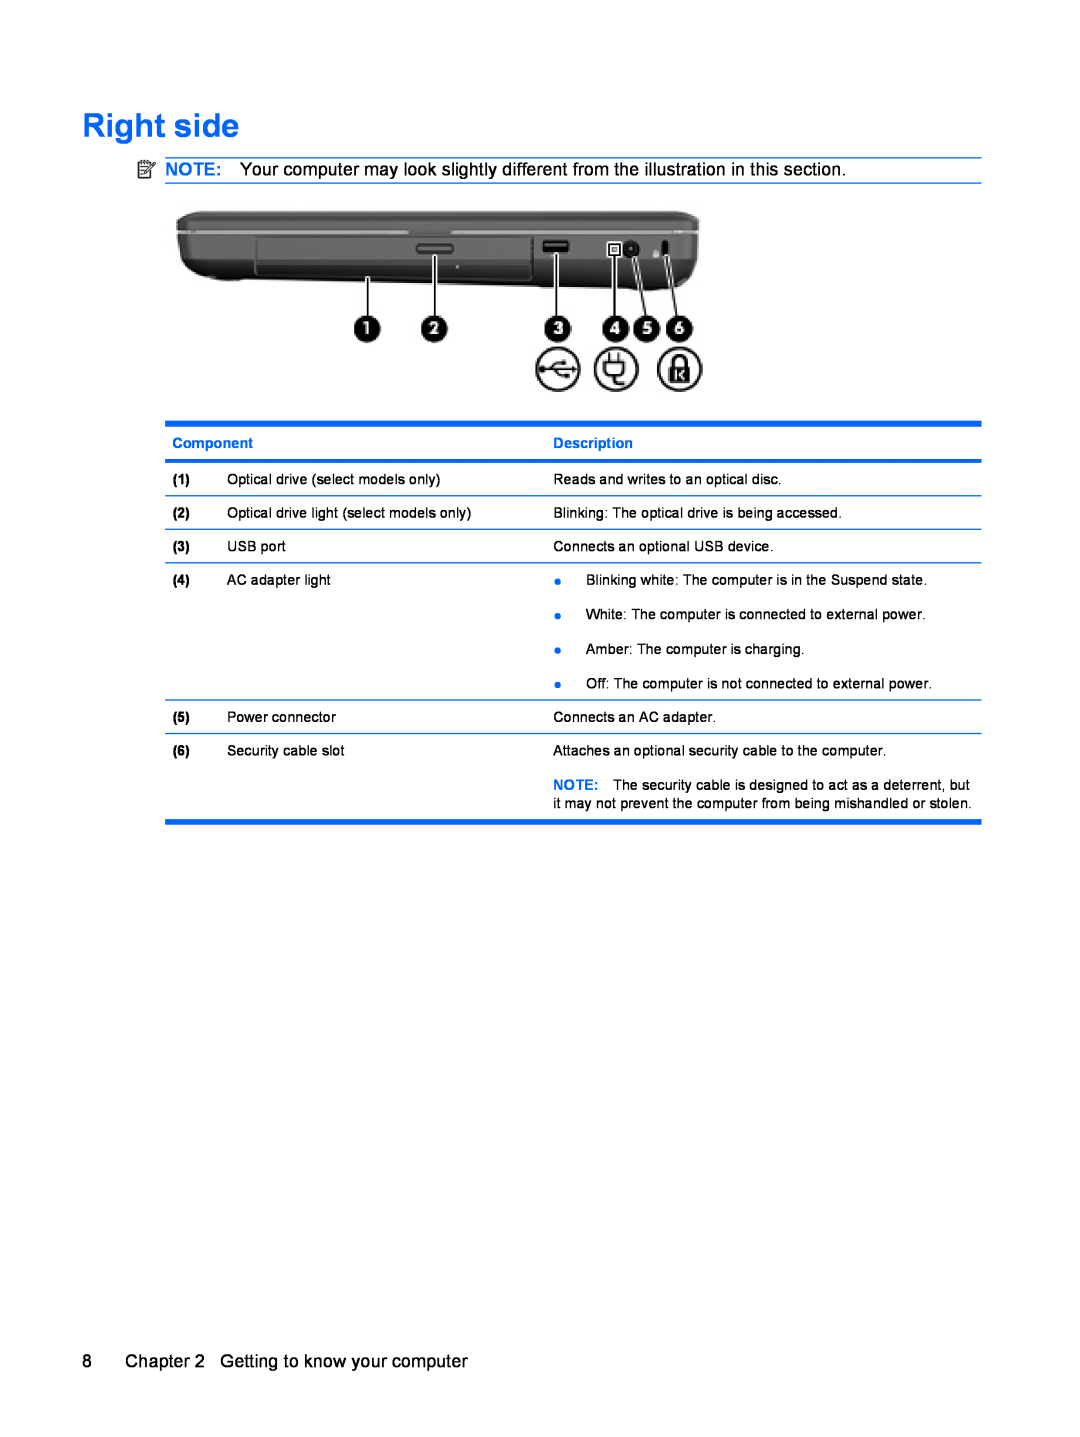 HP CQ56-154CA, CQ56-110US, CQ56-100XX, CQ56-104CA, CQ56-112NR, CQ56-115DX, CQ56-122NR manual Right side, Component, Description 